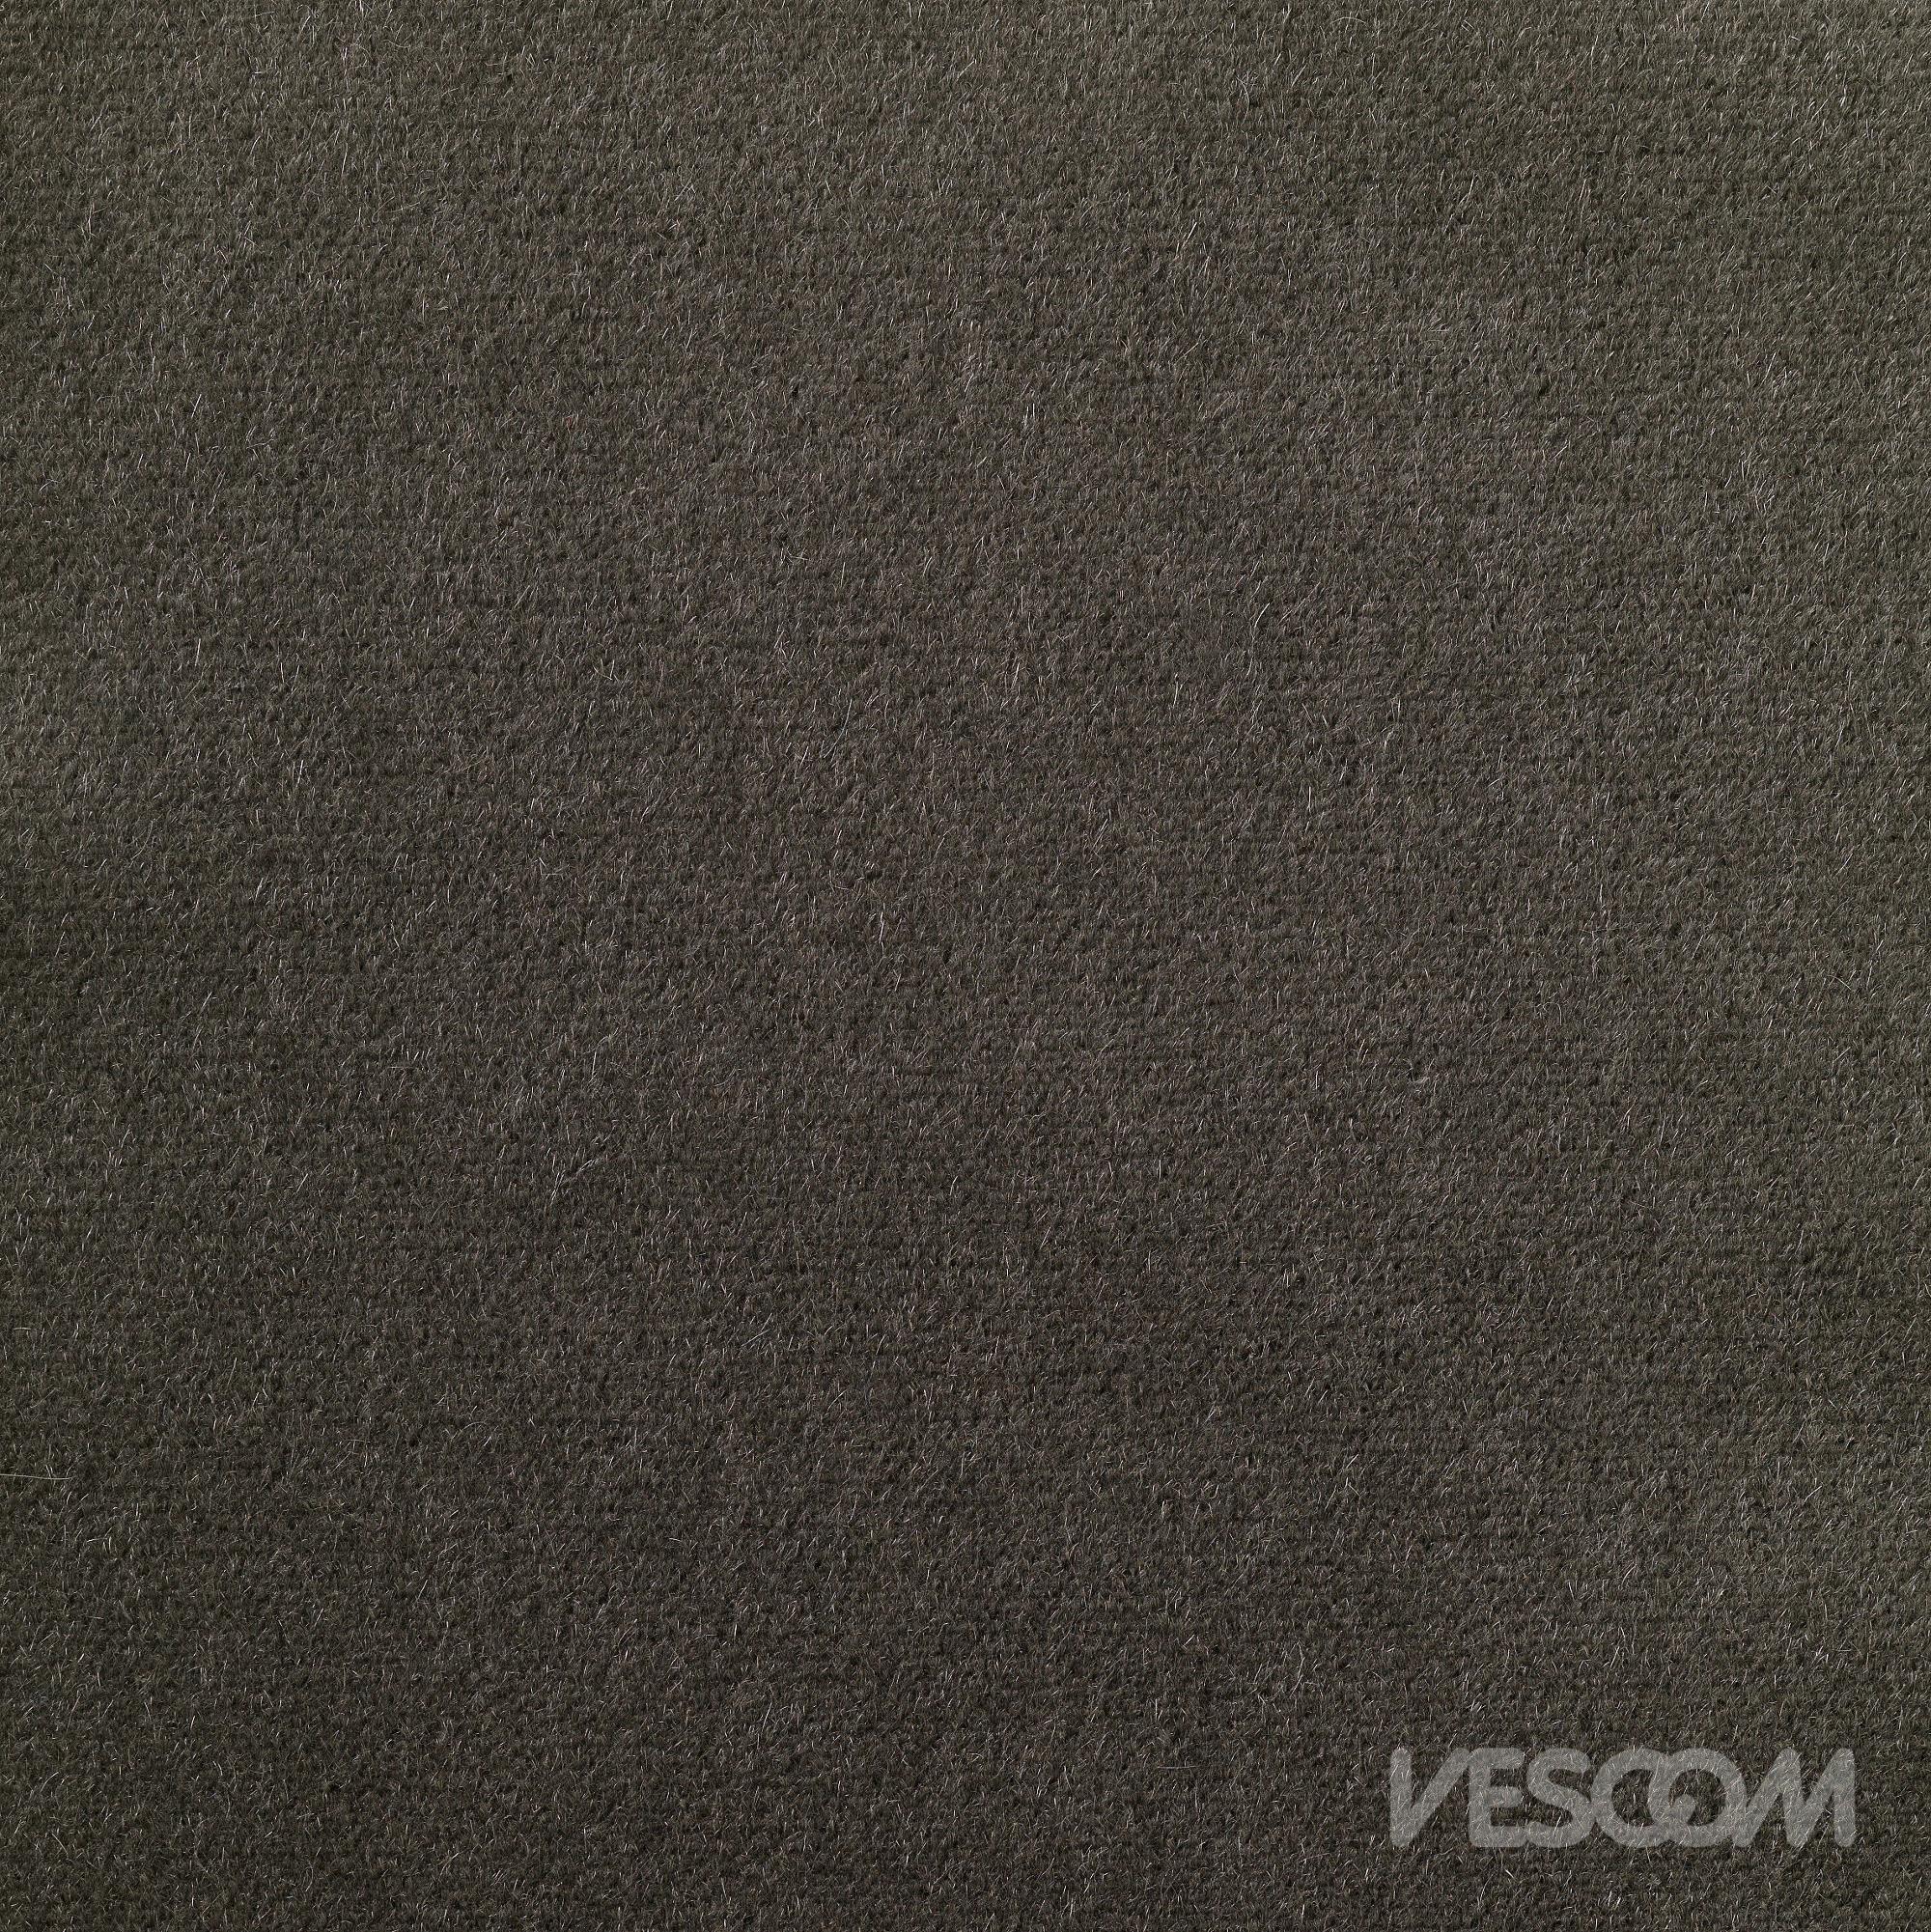 Vescom Ariana Upholstery Fabric 7061.12